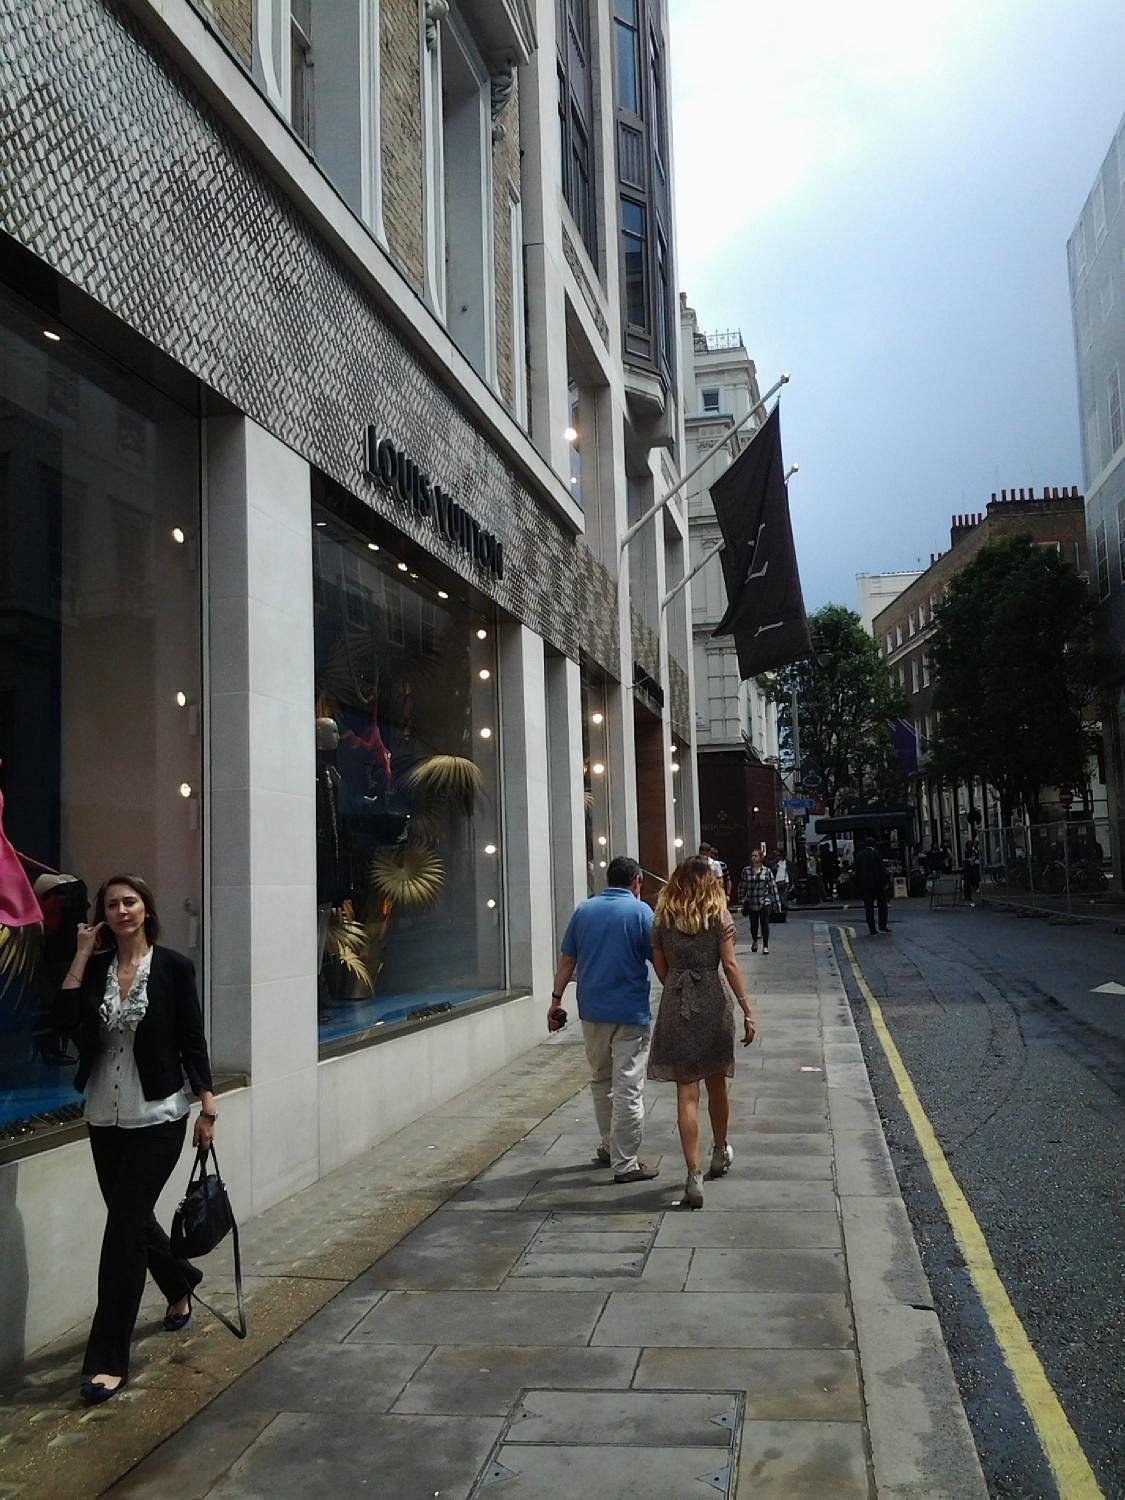 Louis Vuitton opens New Bond Street store in London